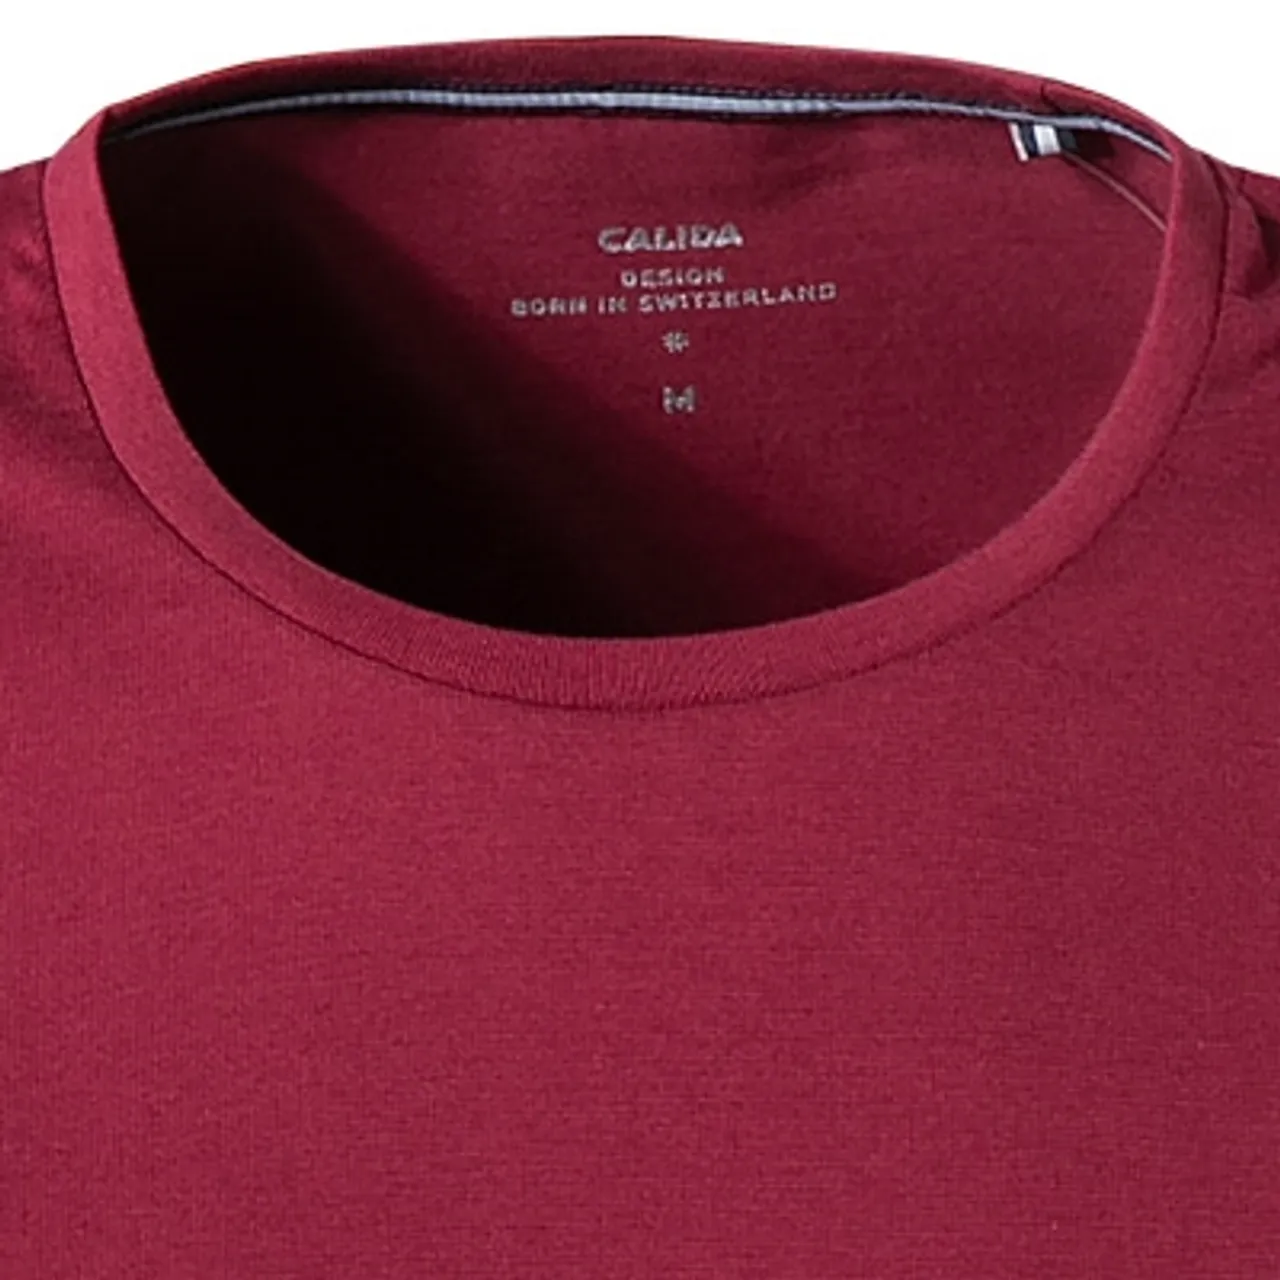 CALIDA Herren T-Shirt rot Baumwolle unifarben